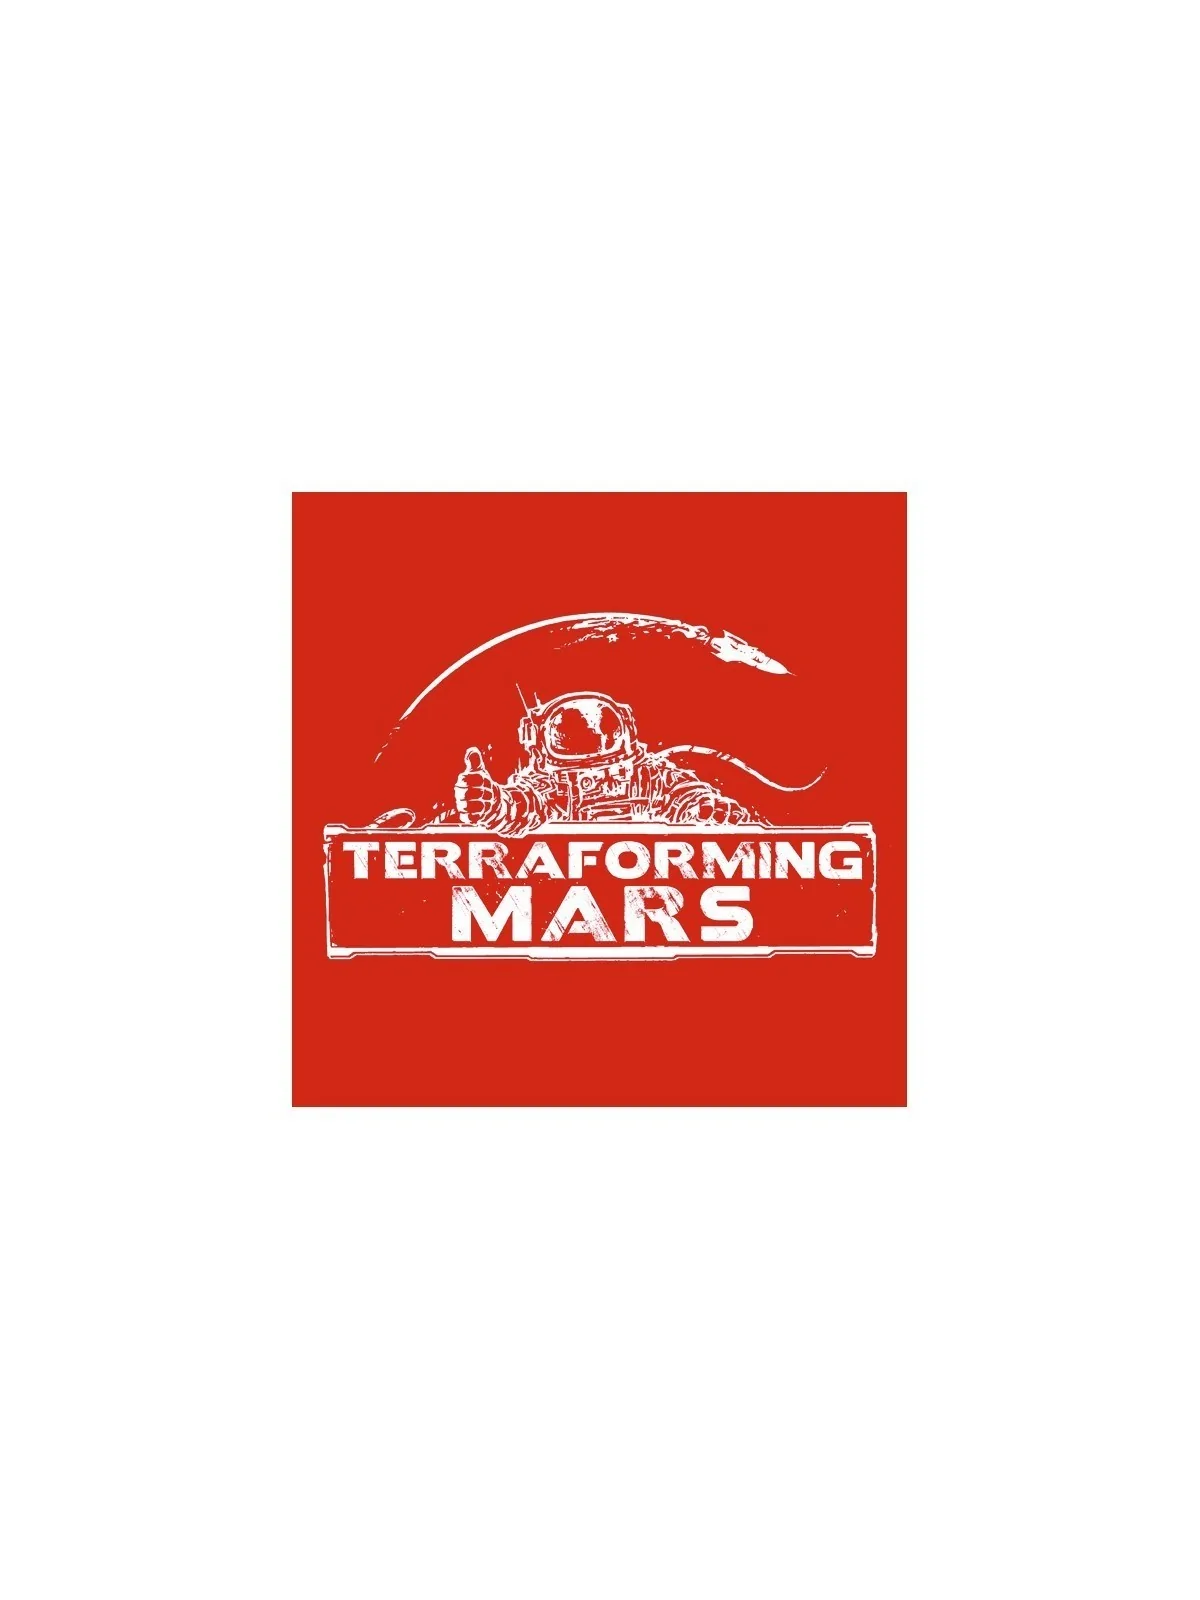 Comprar Camiseta Unisex Astronauta Terraforming Mars barato al mejor p